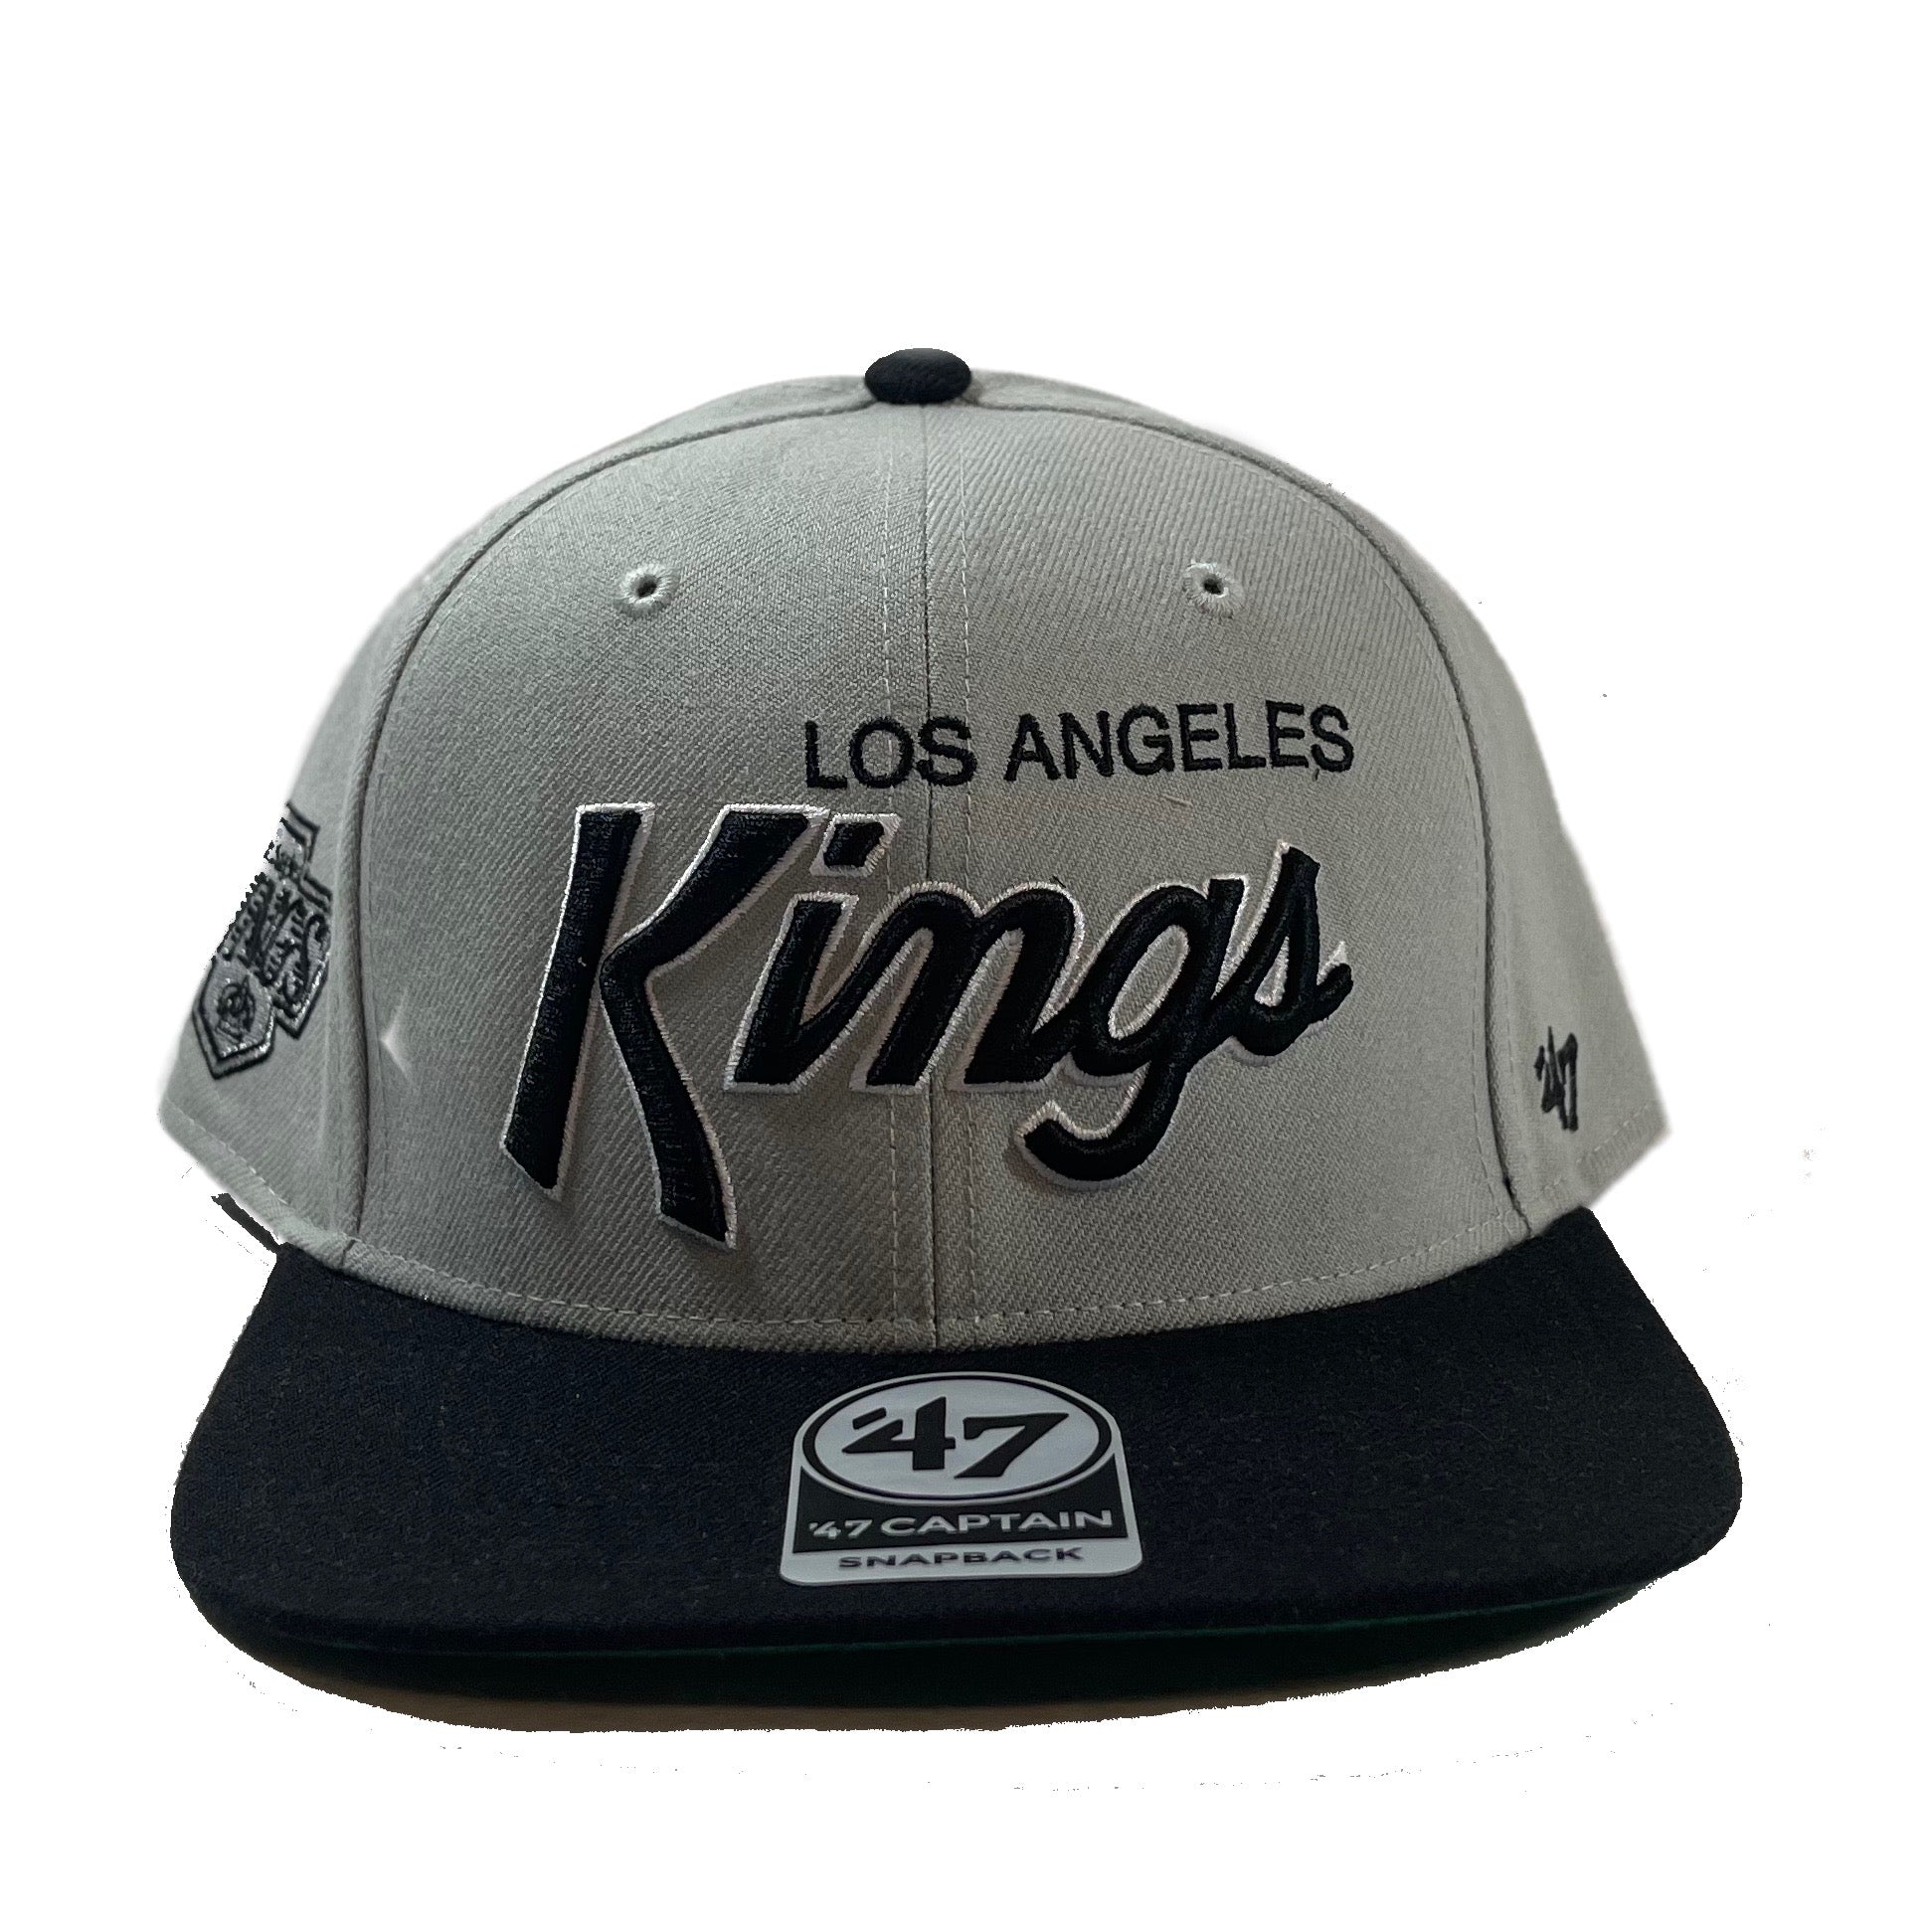 LOS ANGELES KINGS '47 TRUCKER